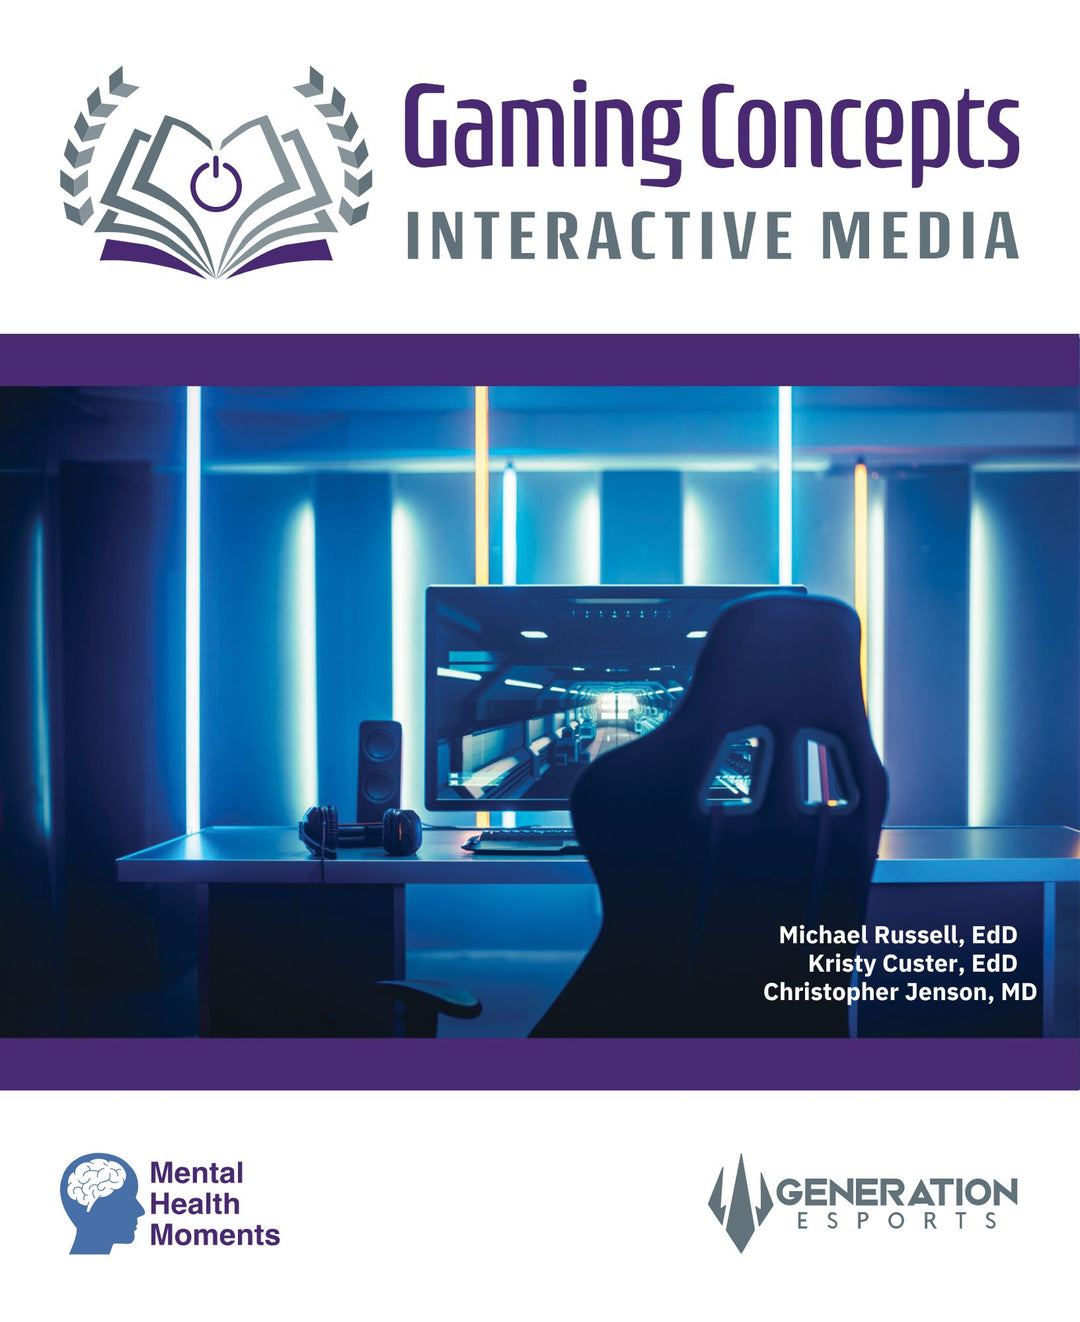 Generation Esports: Gaming Concepts - Interactive Media (Digital Curriculum)